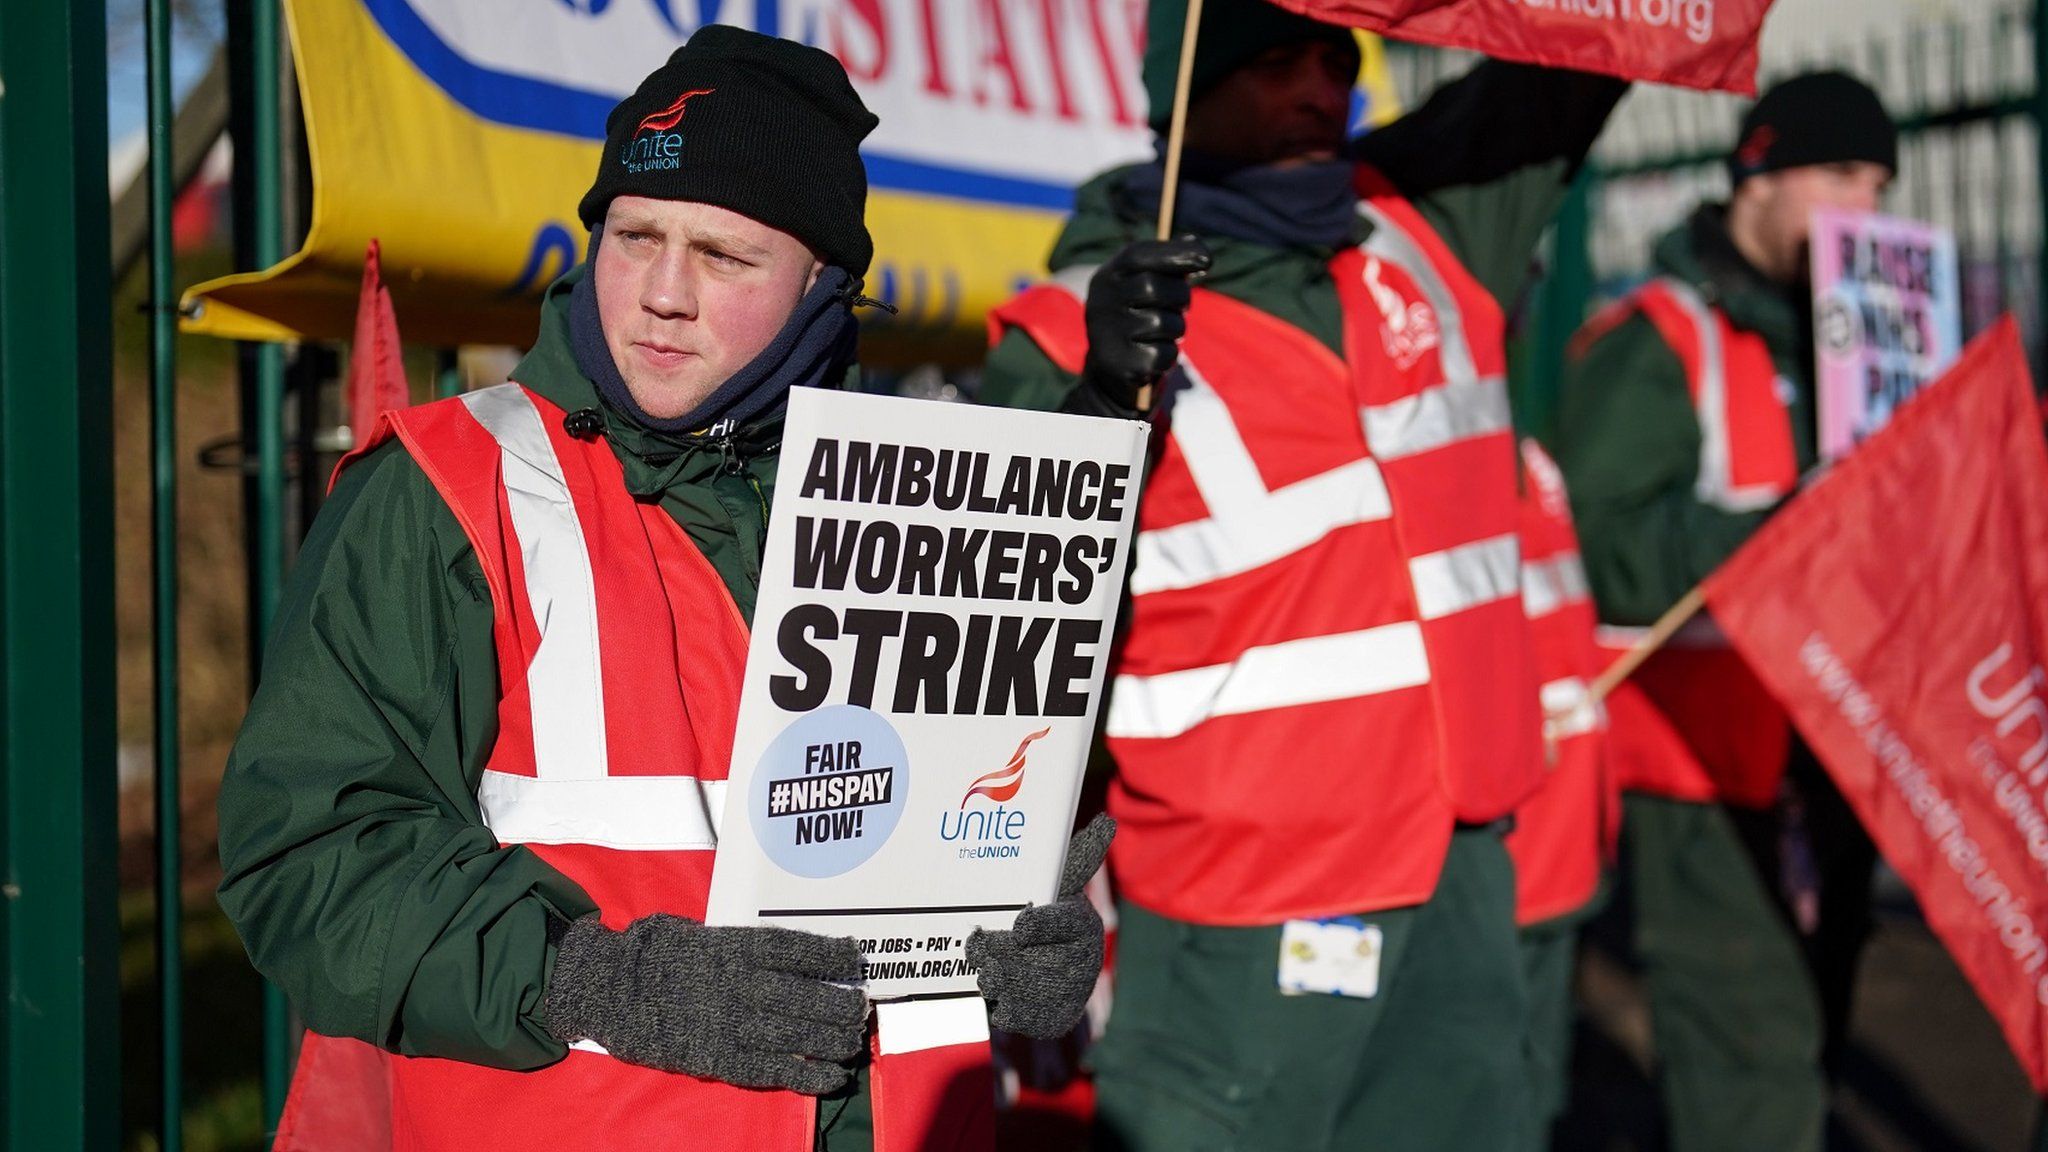 Ambulance workers on strike